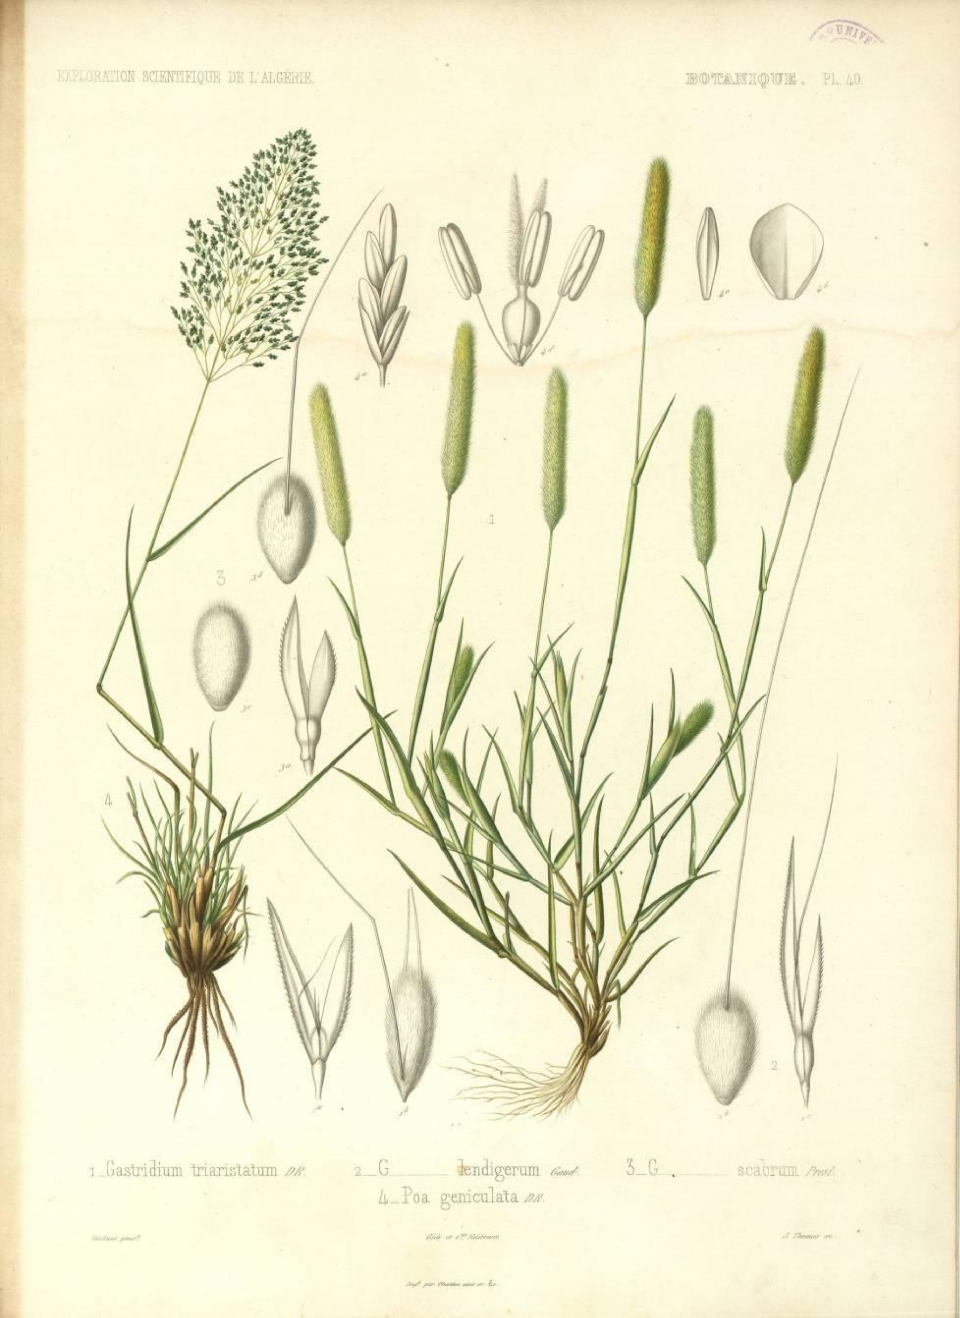 Eragrostis cylindriflora